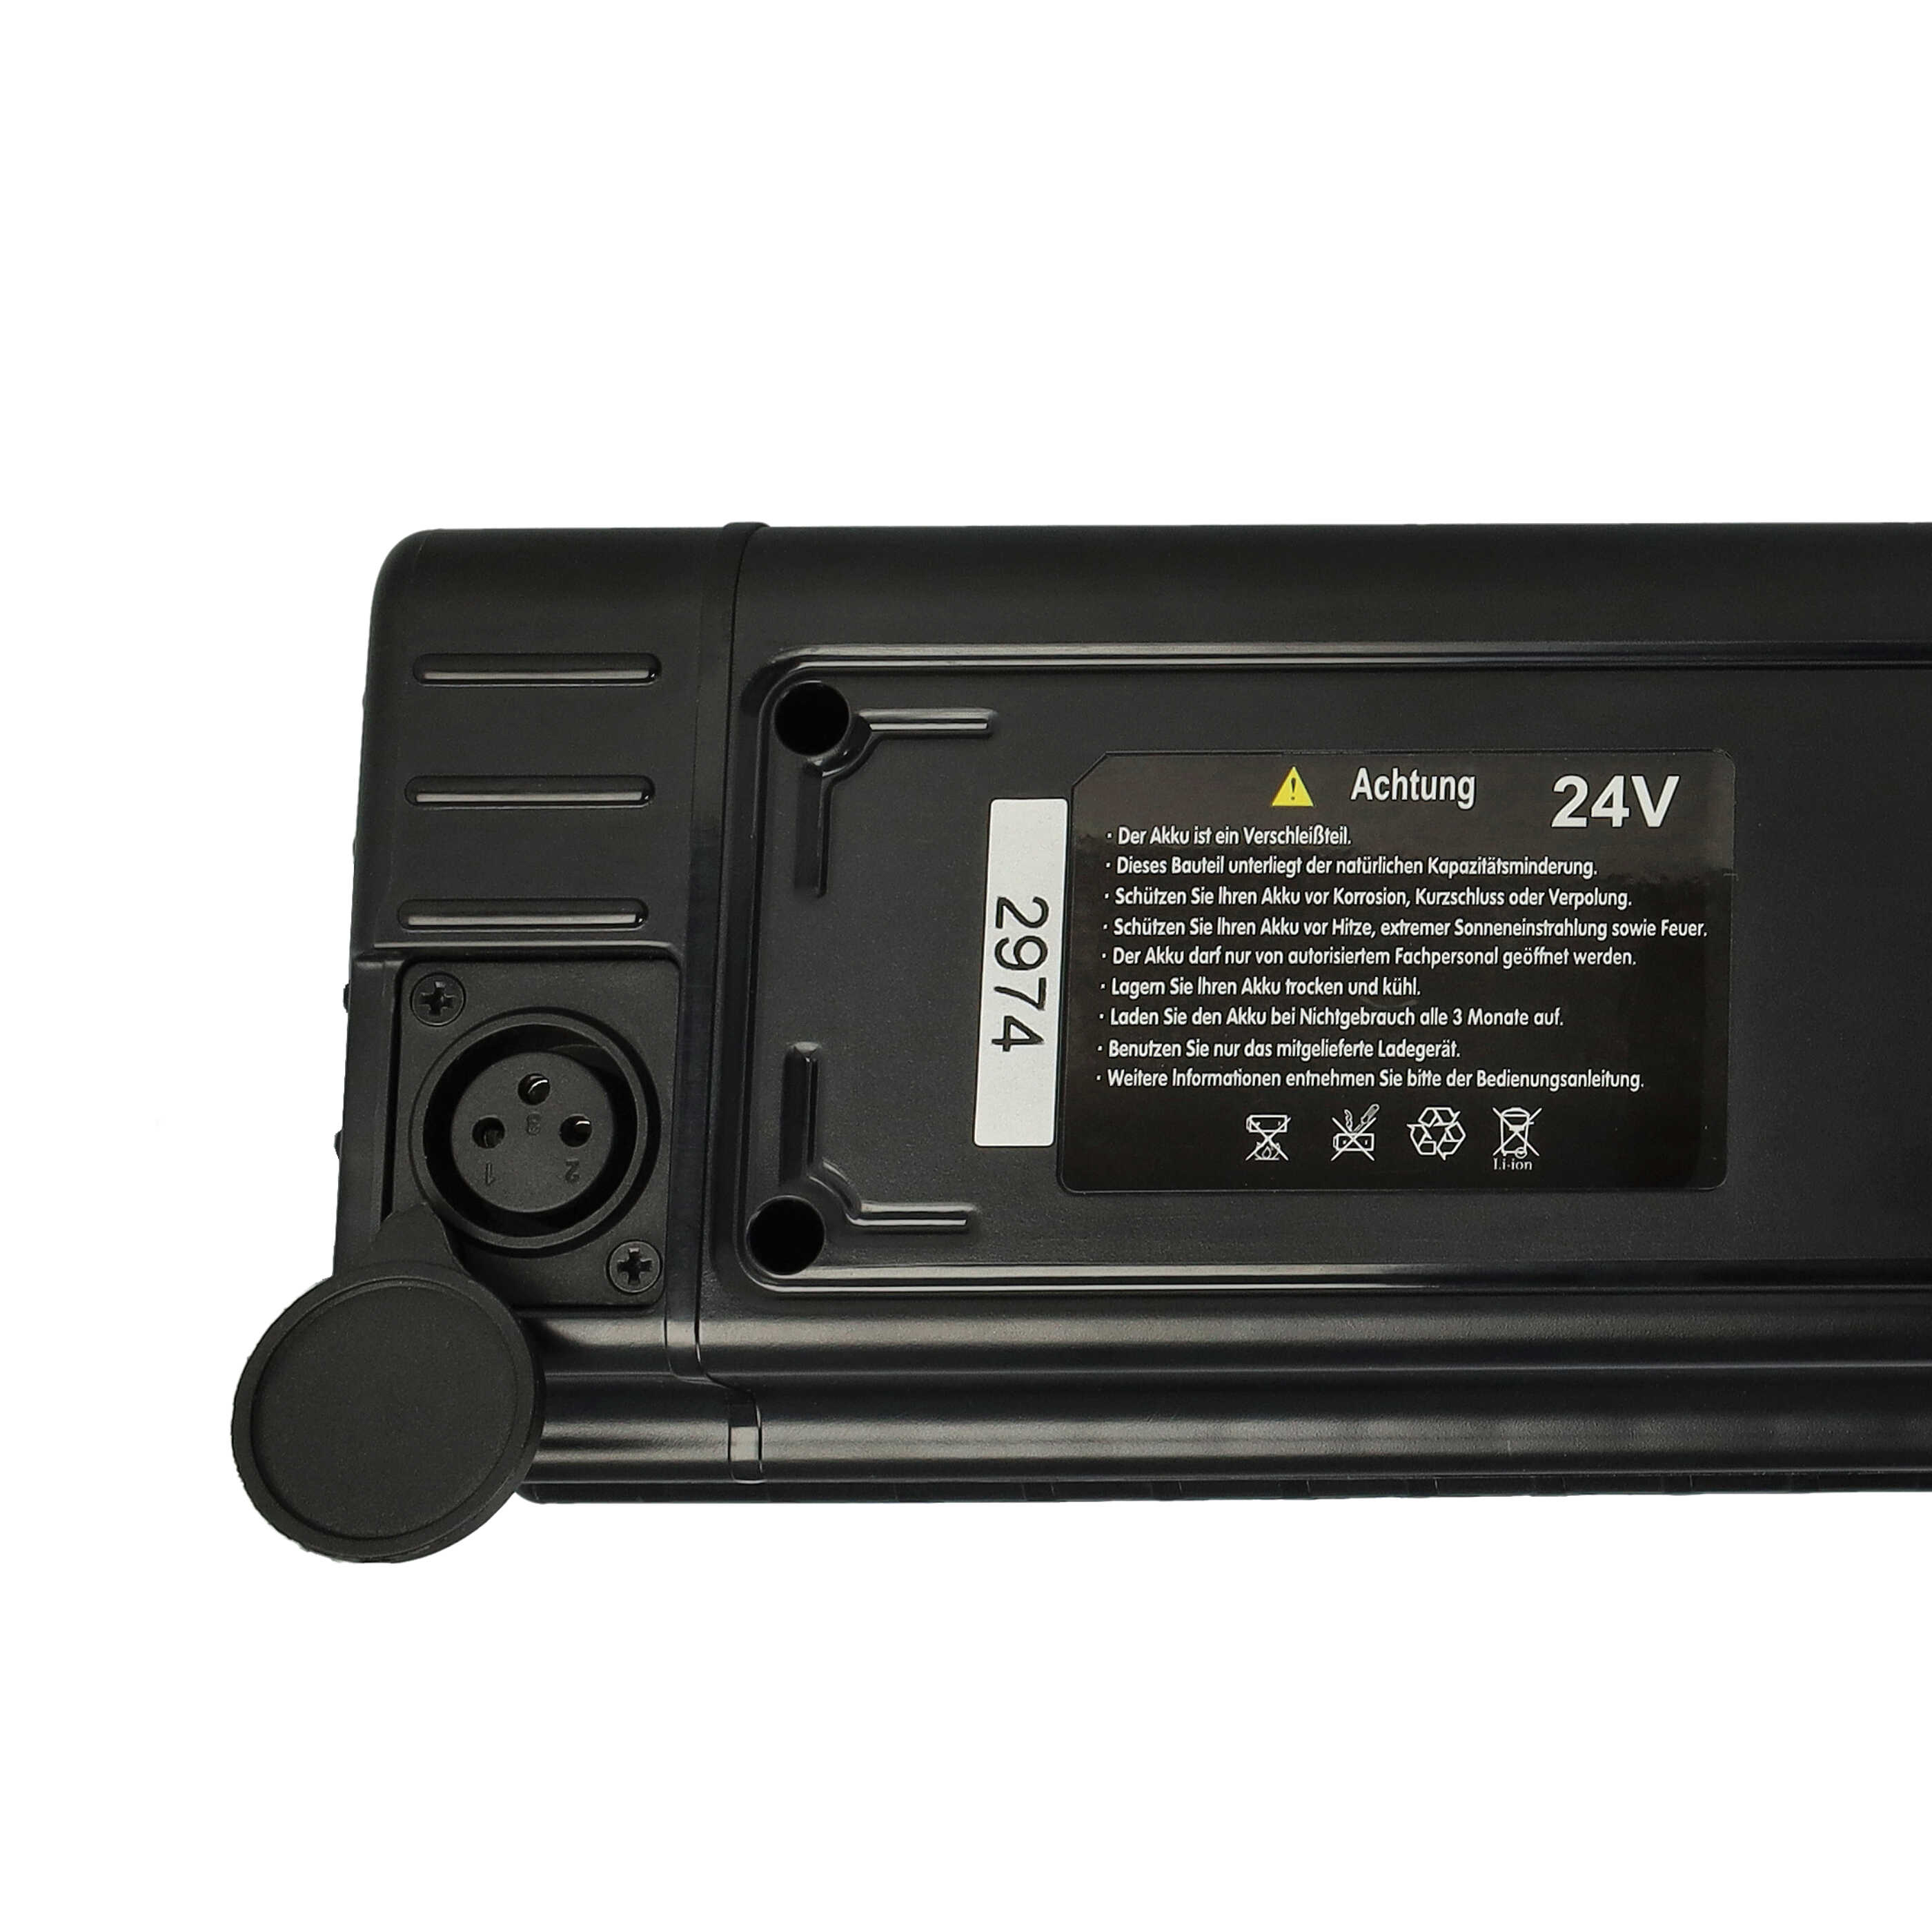 E-Bike Battery Replacement for Samsung SDI 24V - 11.6Ah 24V Li-Ion, black